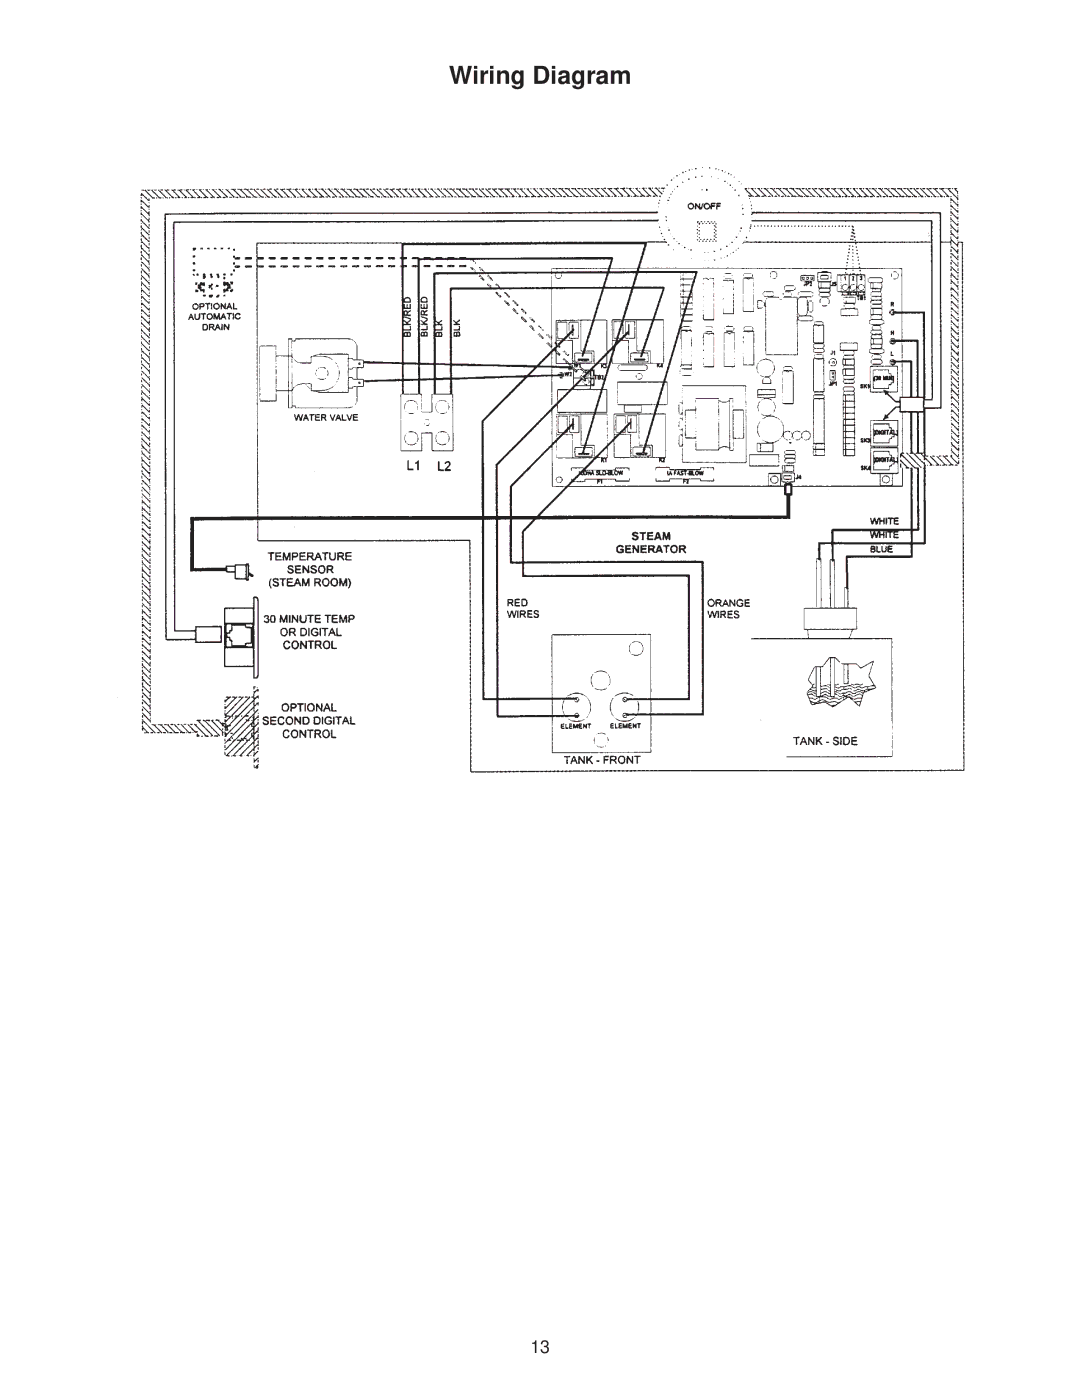 Jacuzzi SEDONA manual Wiring Diagram 